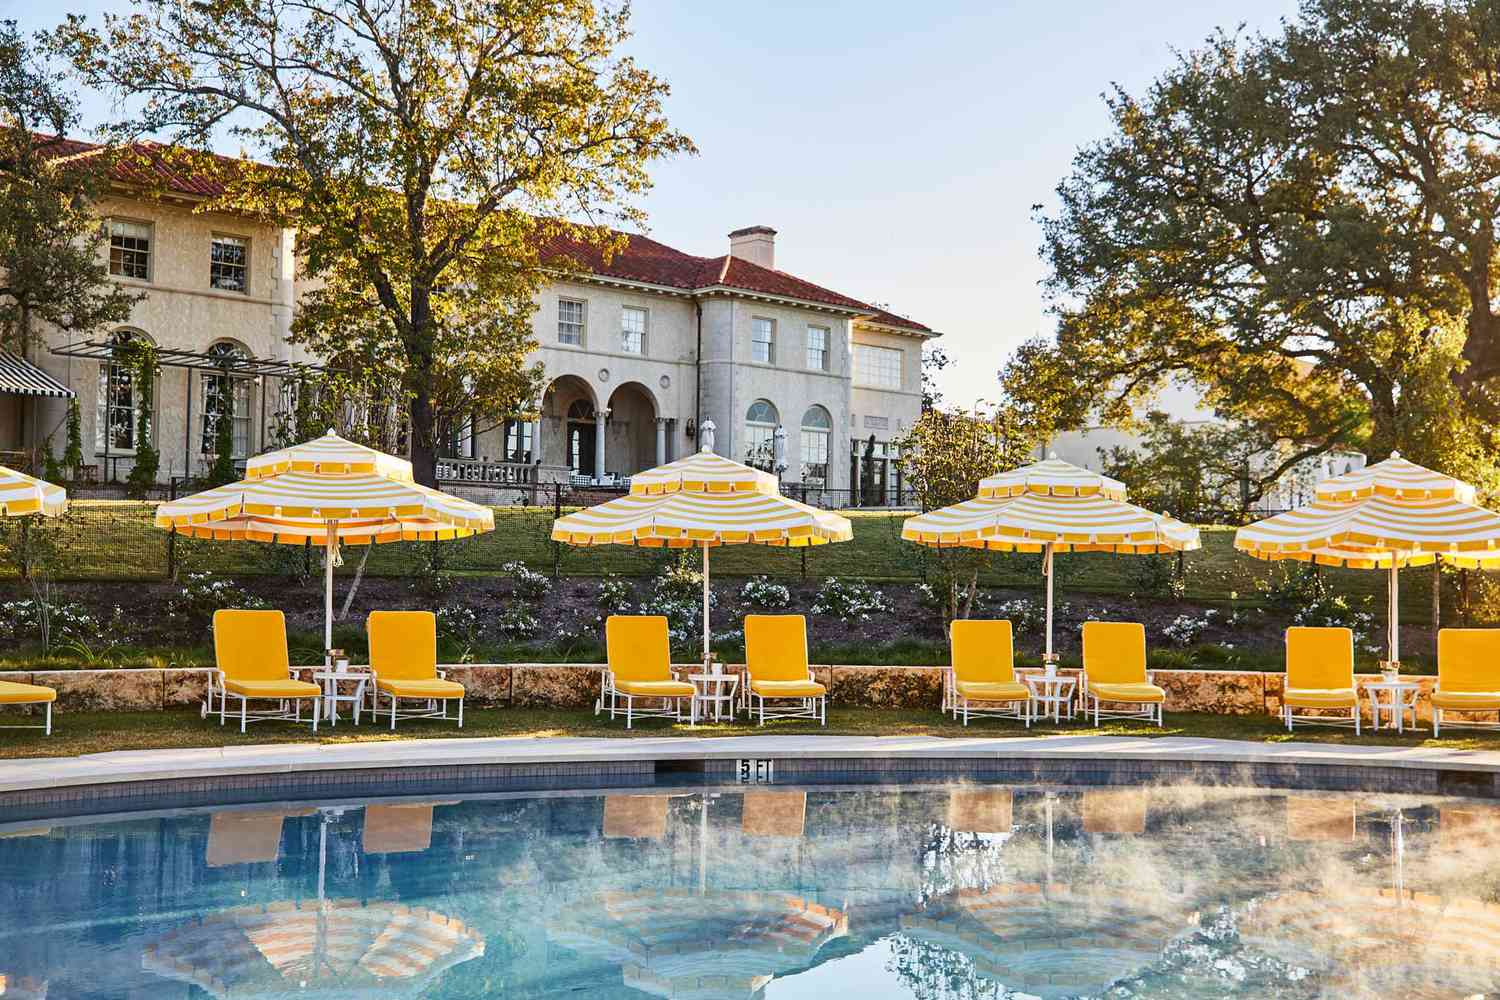 Piscine avec chaises et parasols jaunes au Commodore Perry Estate, Auberge Resorts Collection